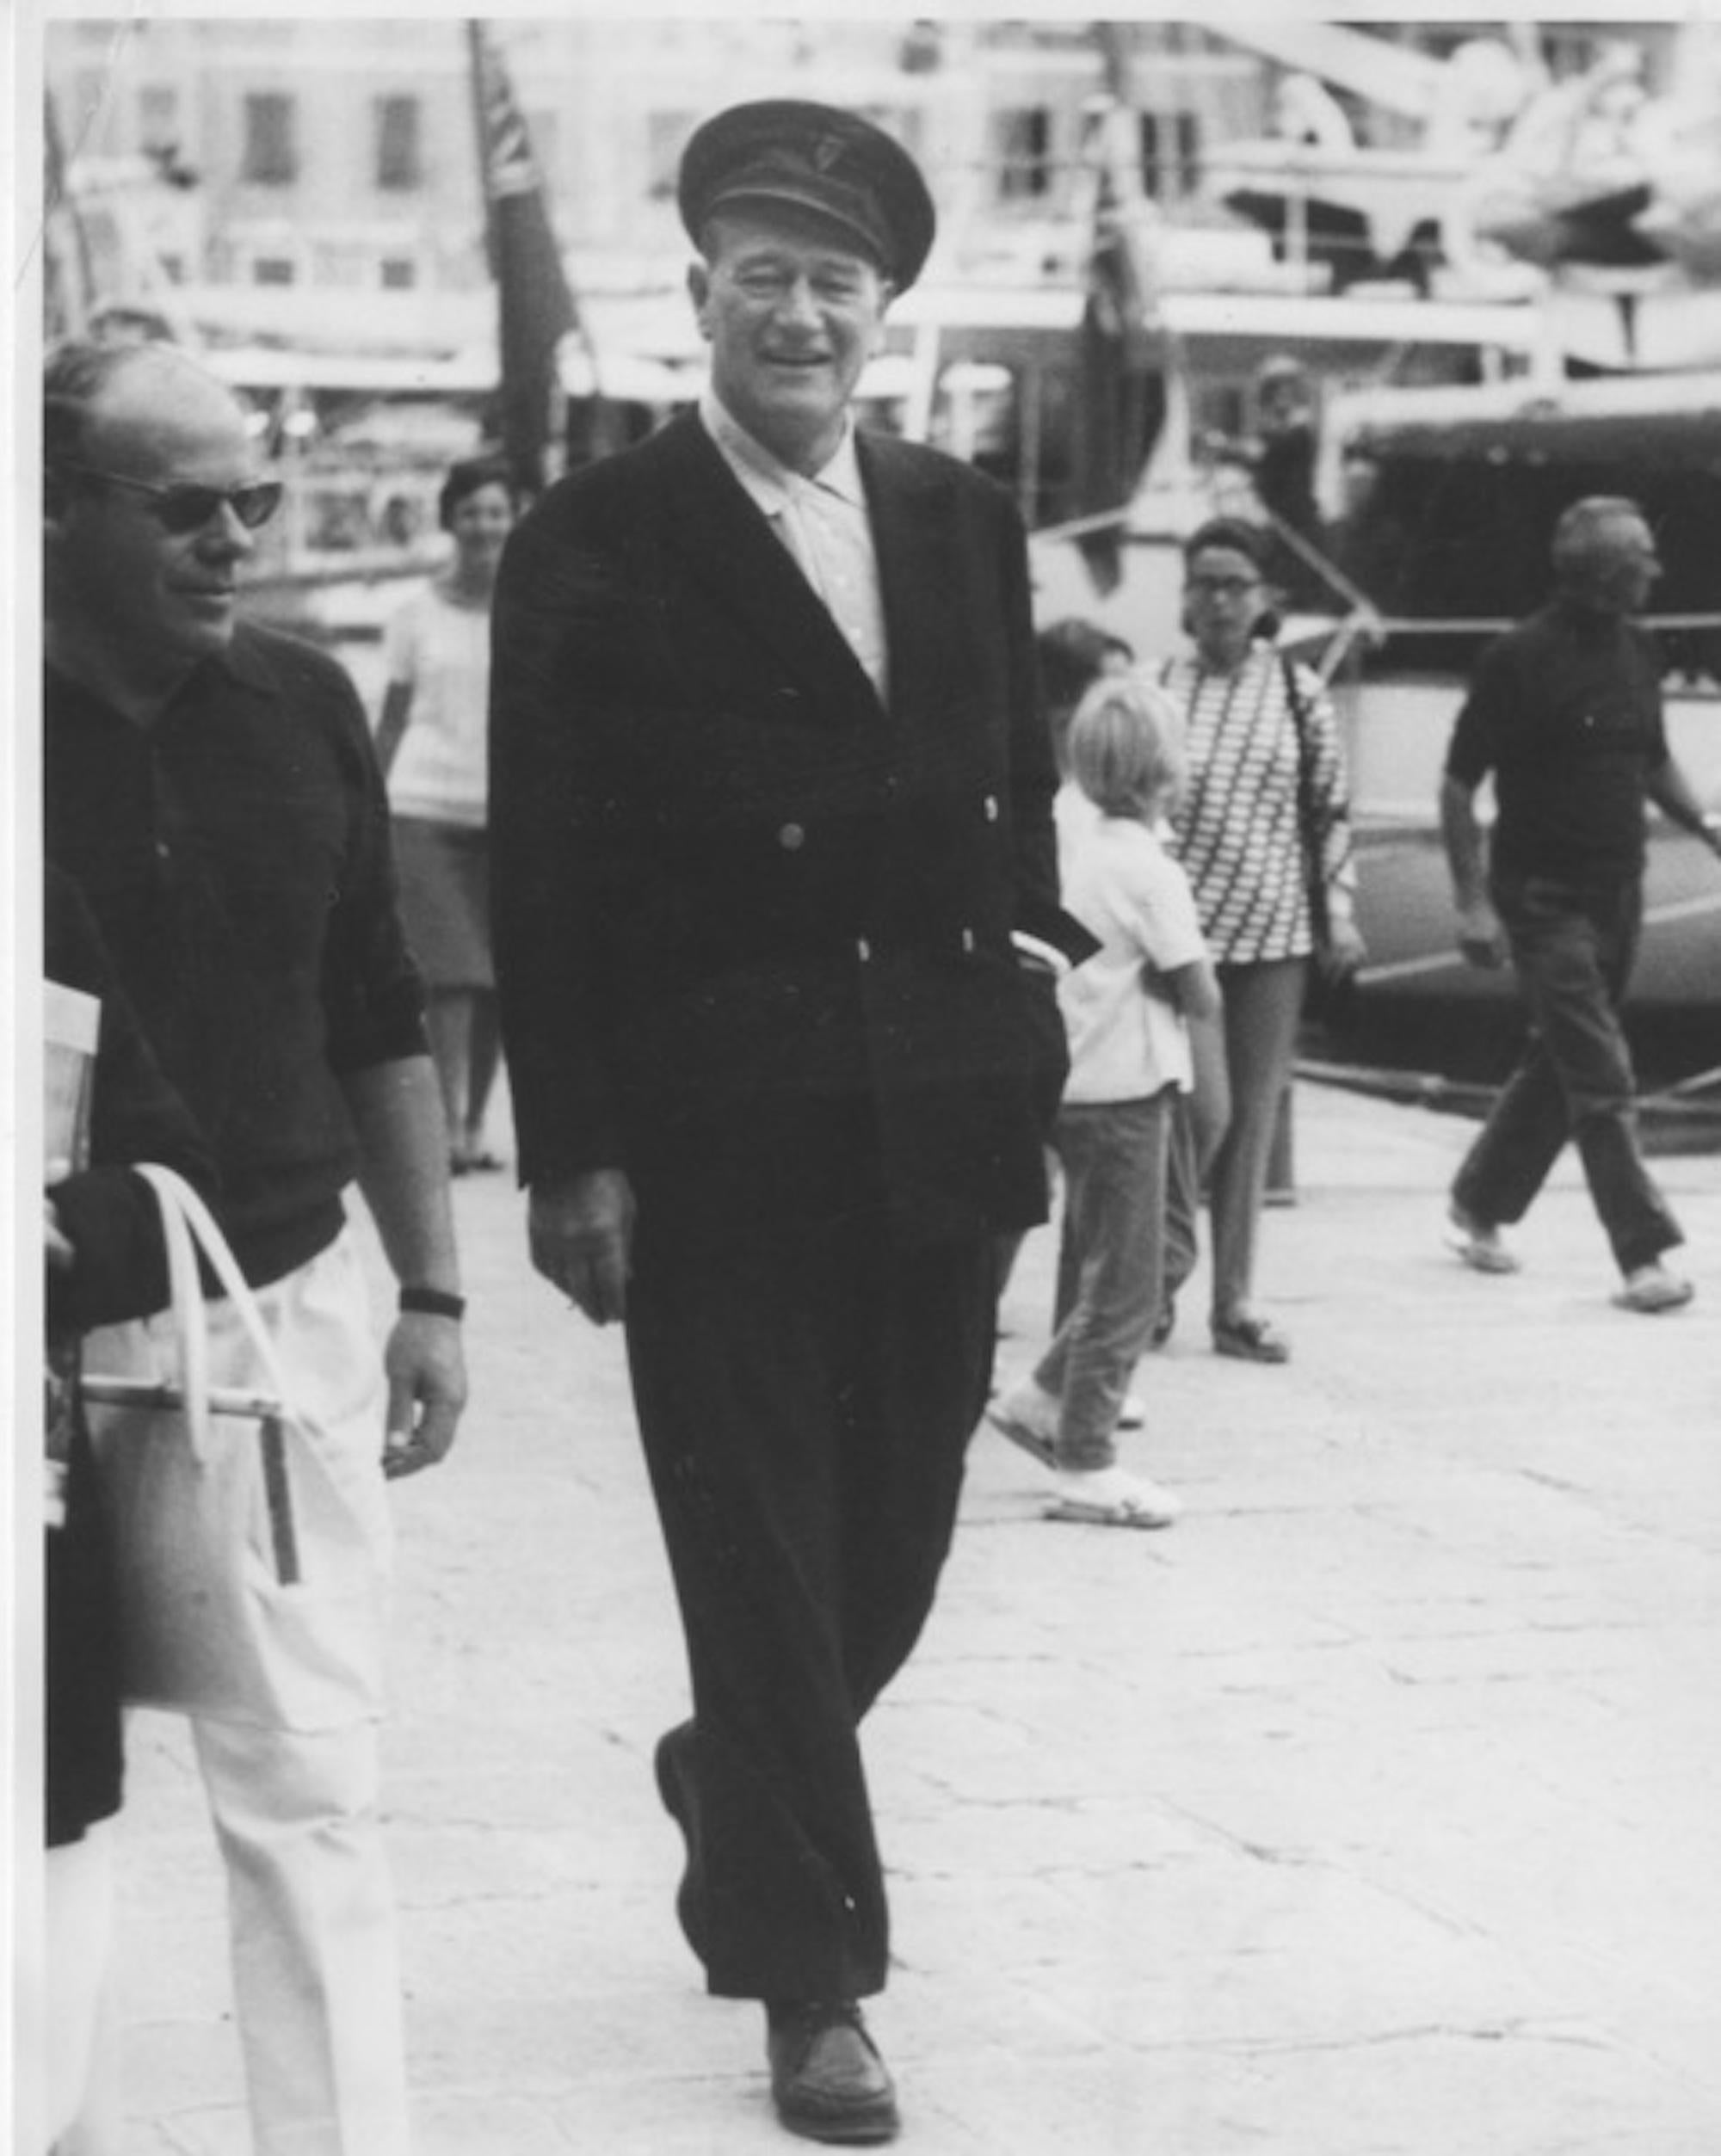 Unknown Portrait Photograph - The American Actor John Wayne - Vintage Photo - 1975